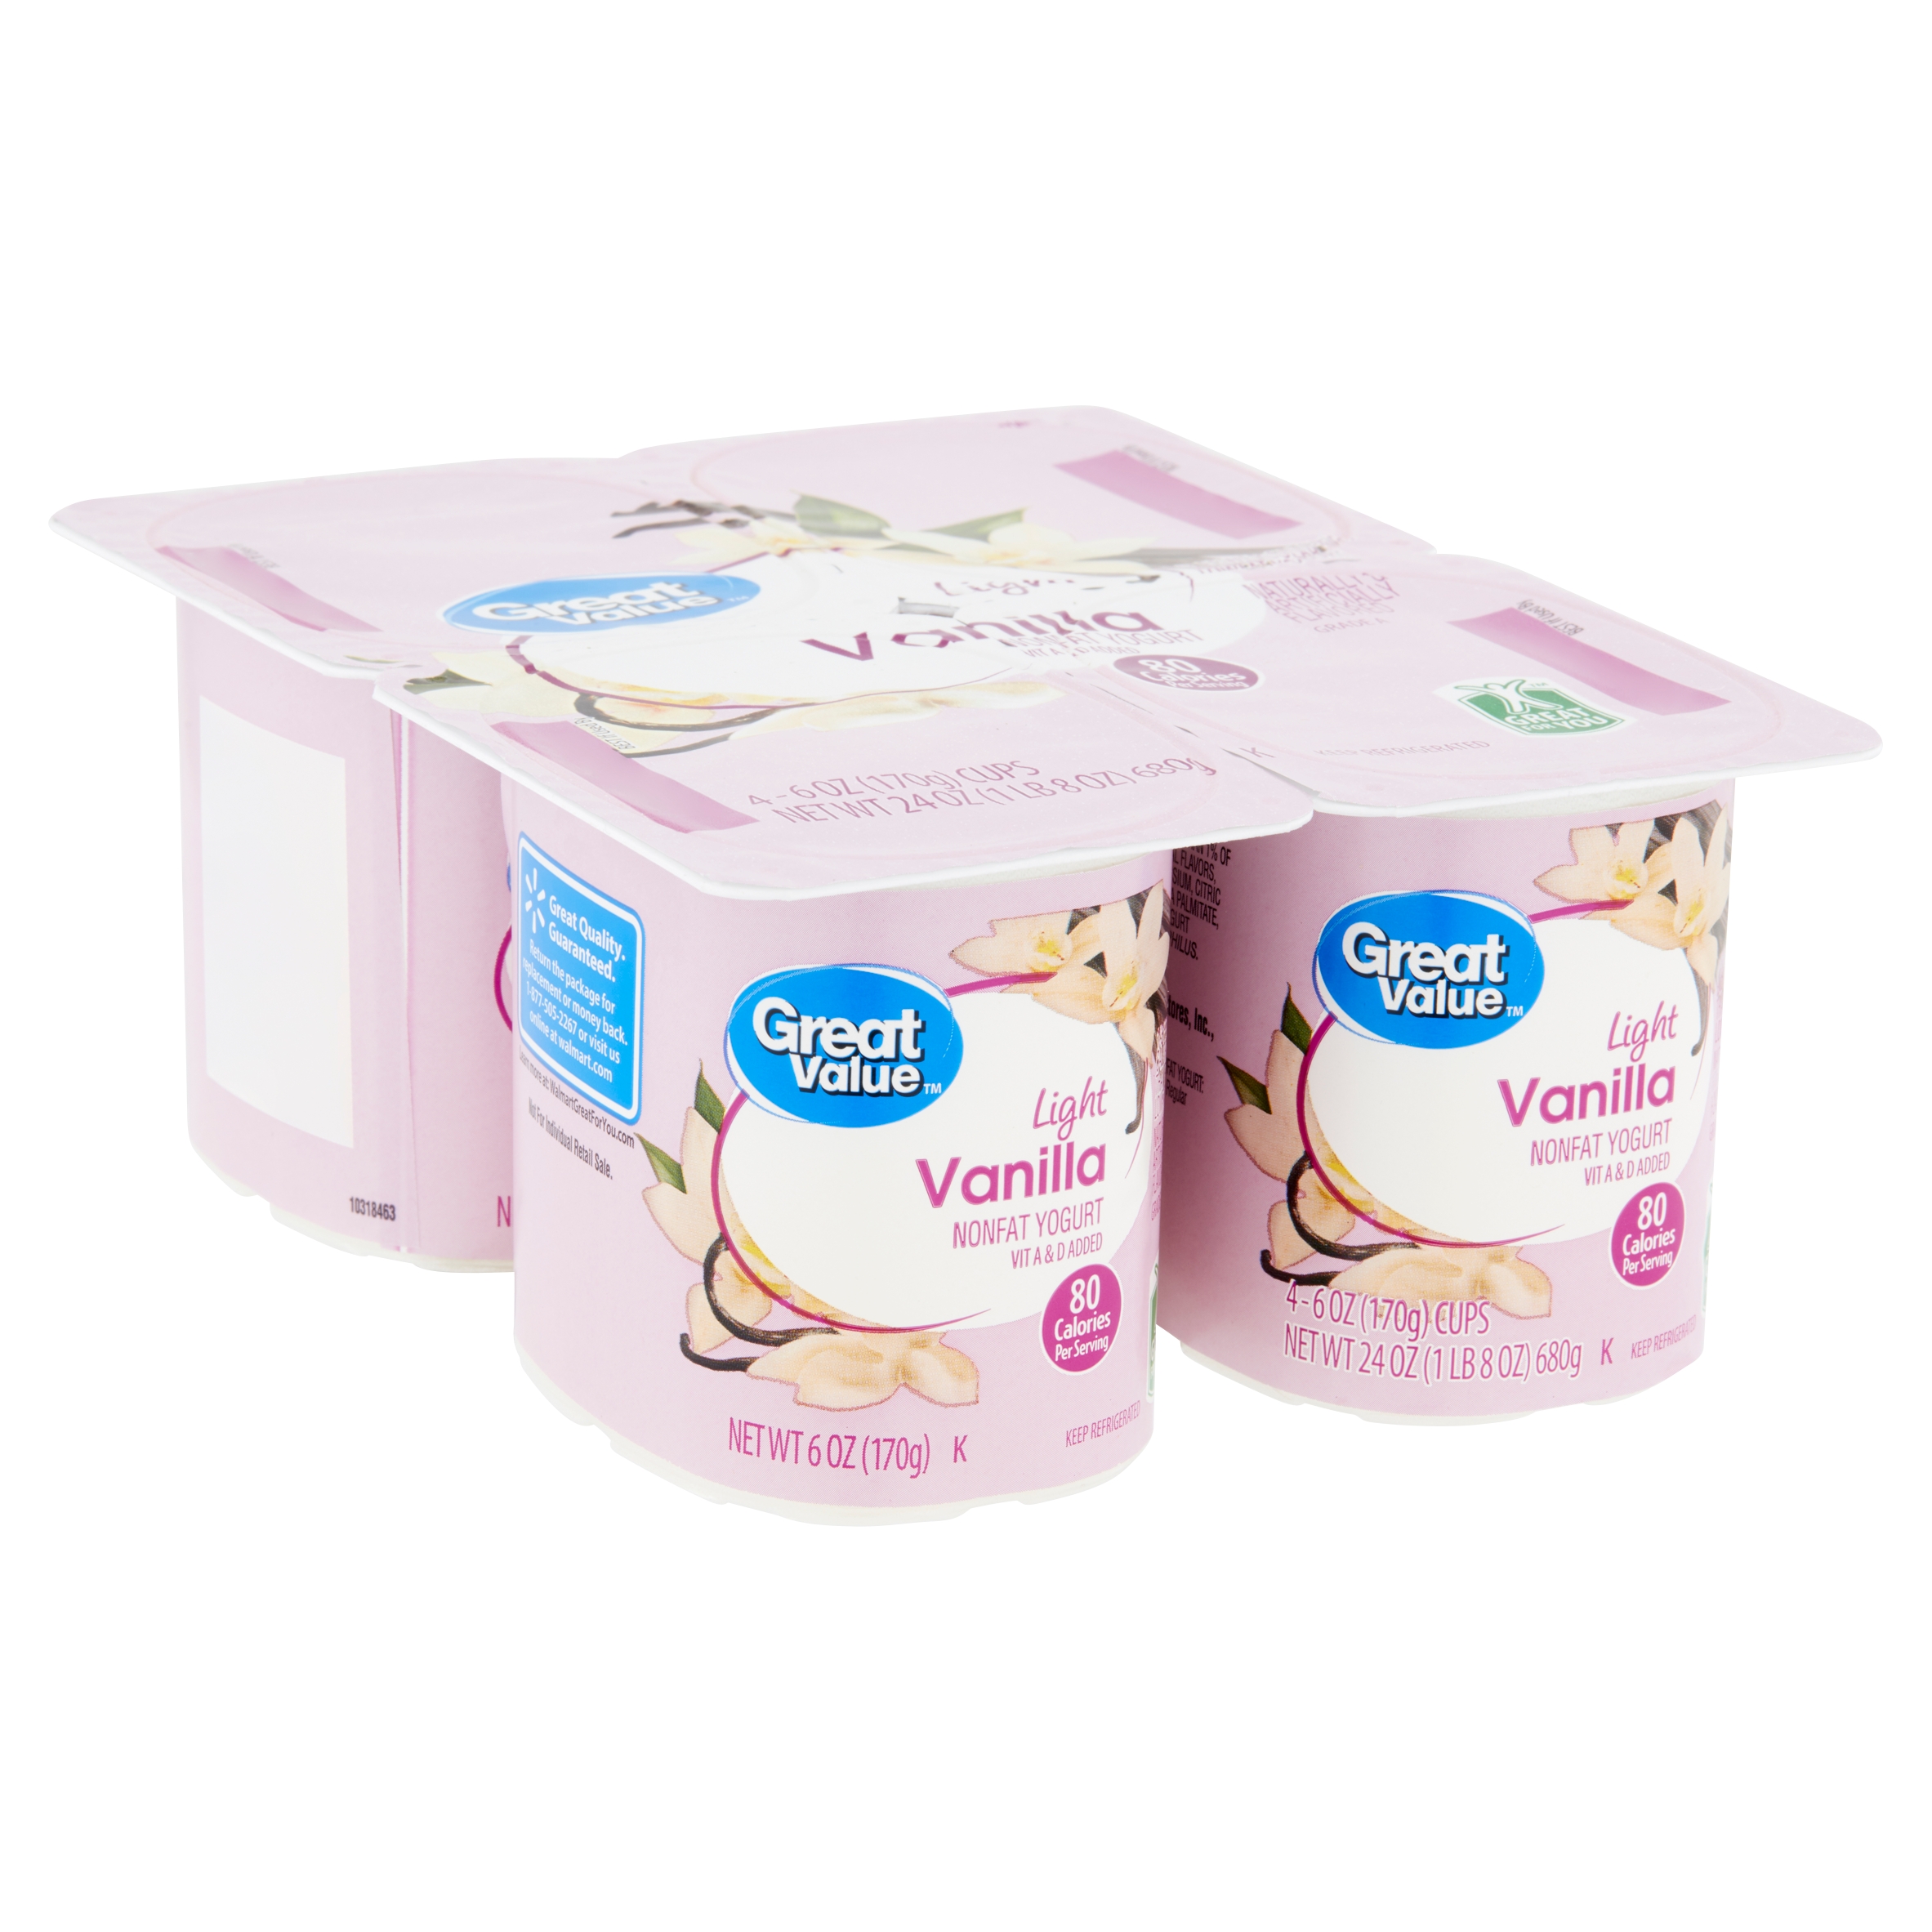 Great Value Light Vanilla Nonfat Yogurt, 6 Oz, 4 Count Image